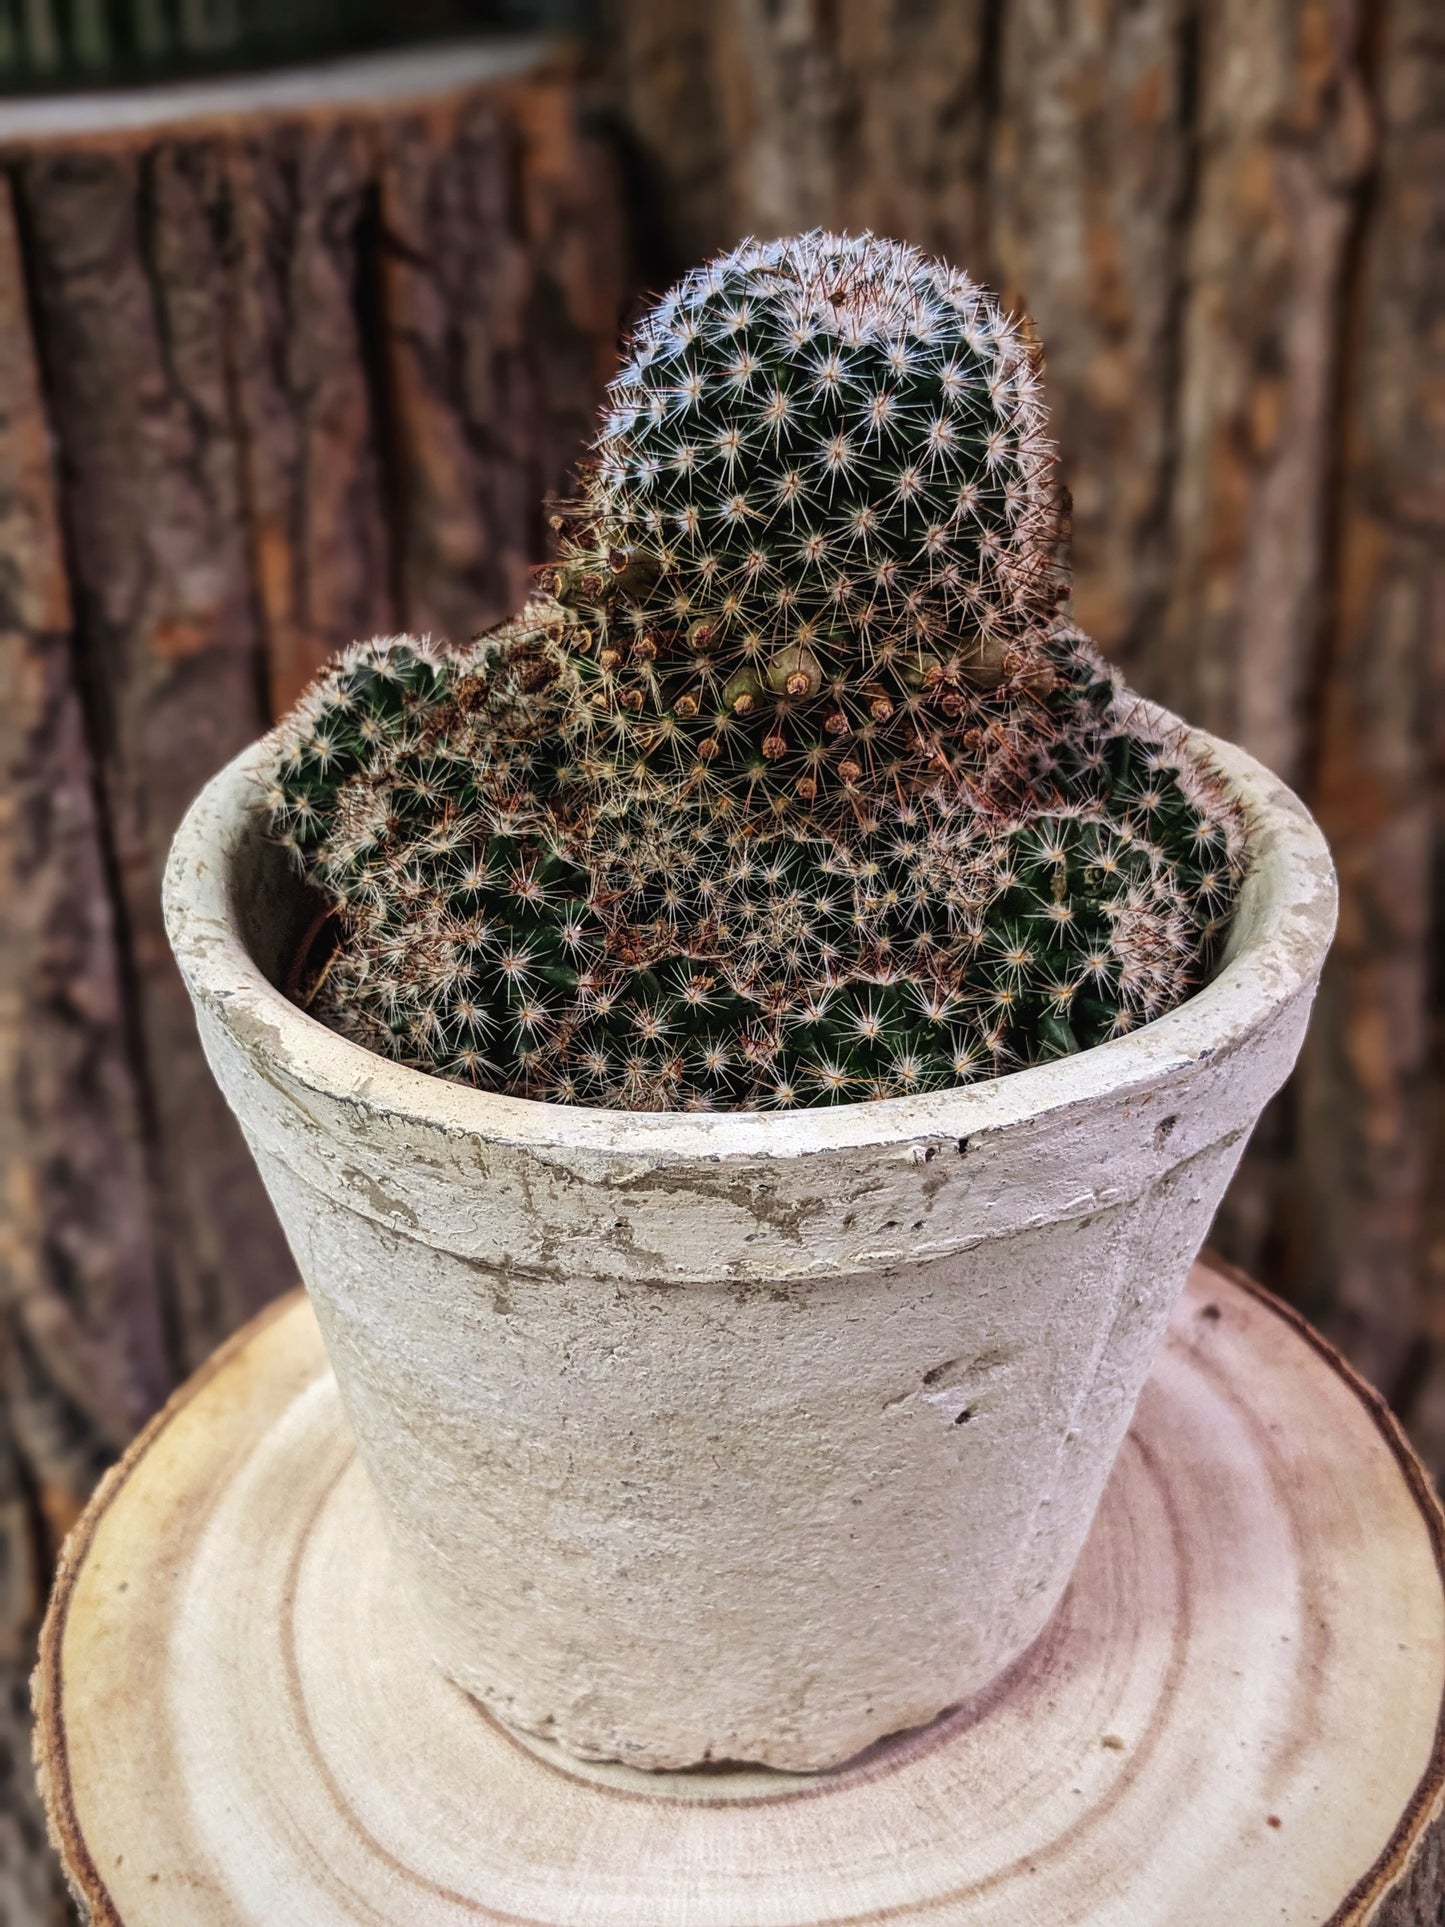 Ouchy (Cactus)